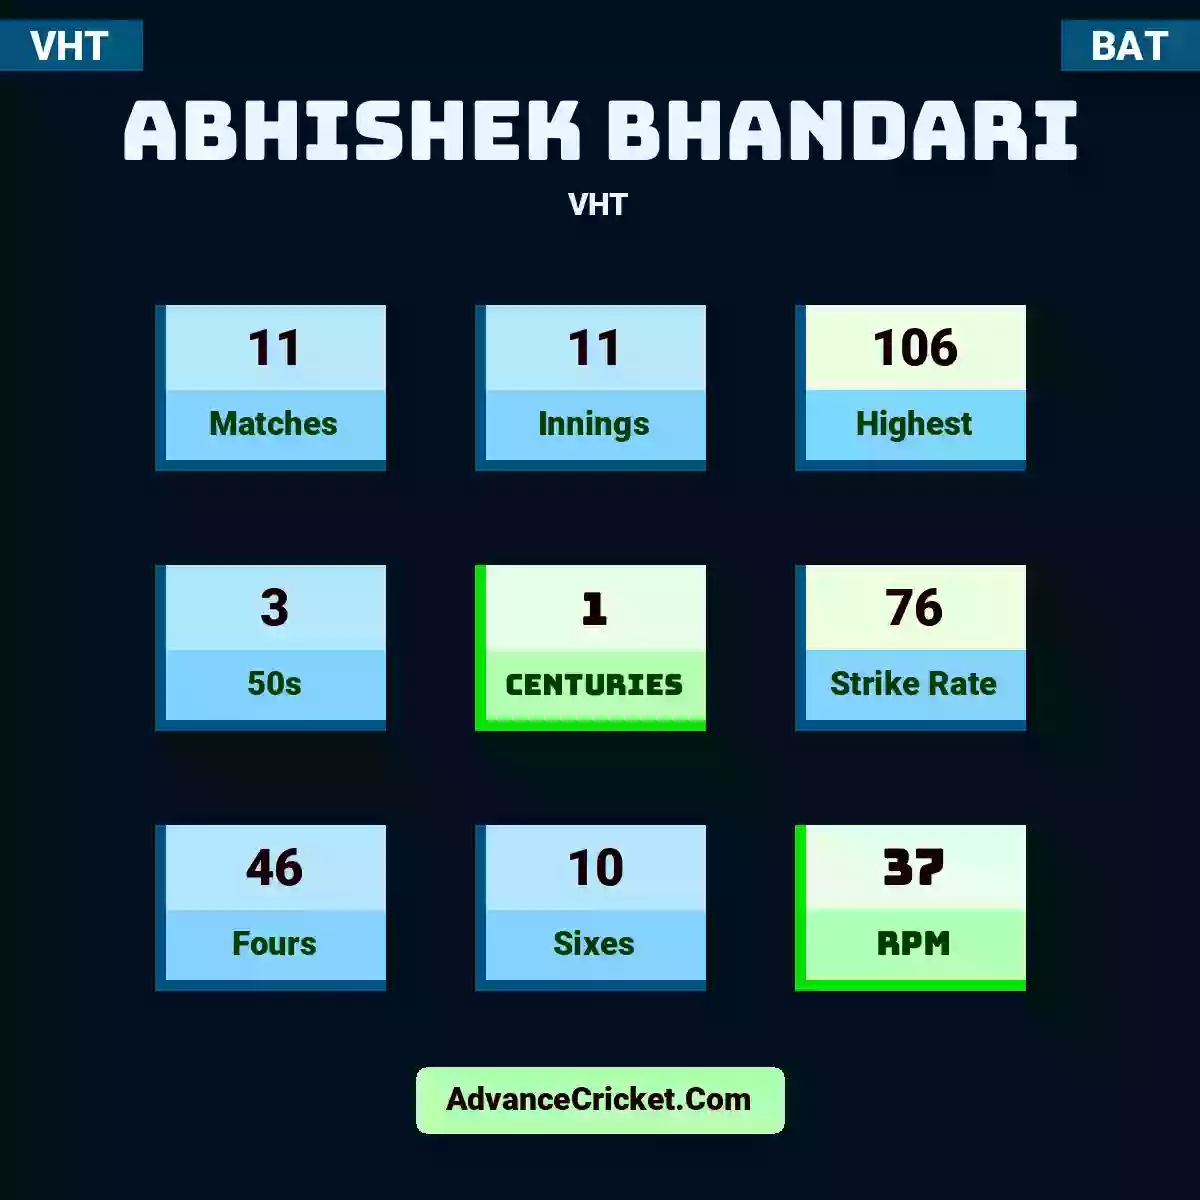 Abhishek Bhandari VHT , Abhishek Bhandari played 11 matches, scored 106 runs as highest, 3 half-centuries, and 1 centuries, with a strike rate of 76. A.Bhandari hit 46 fours and 10 sixes, with an RPM of 37.